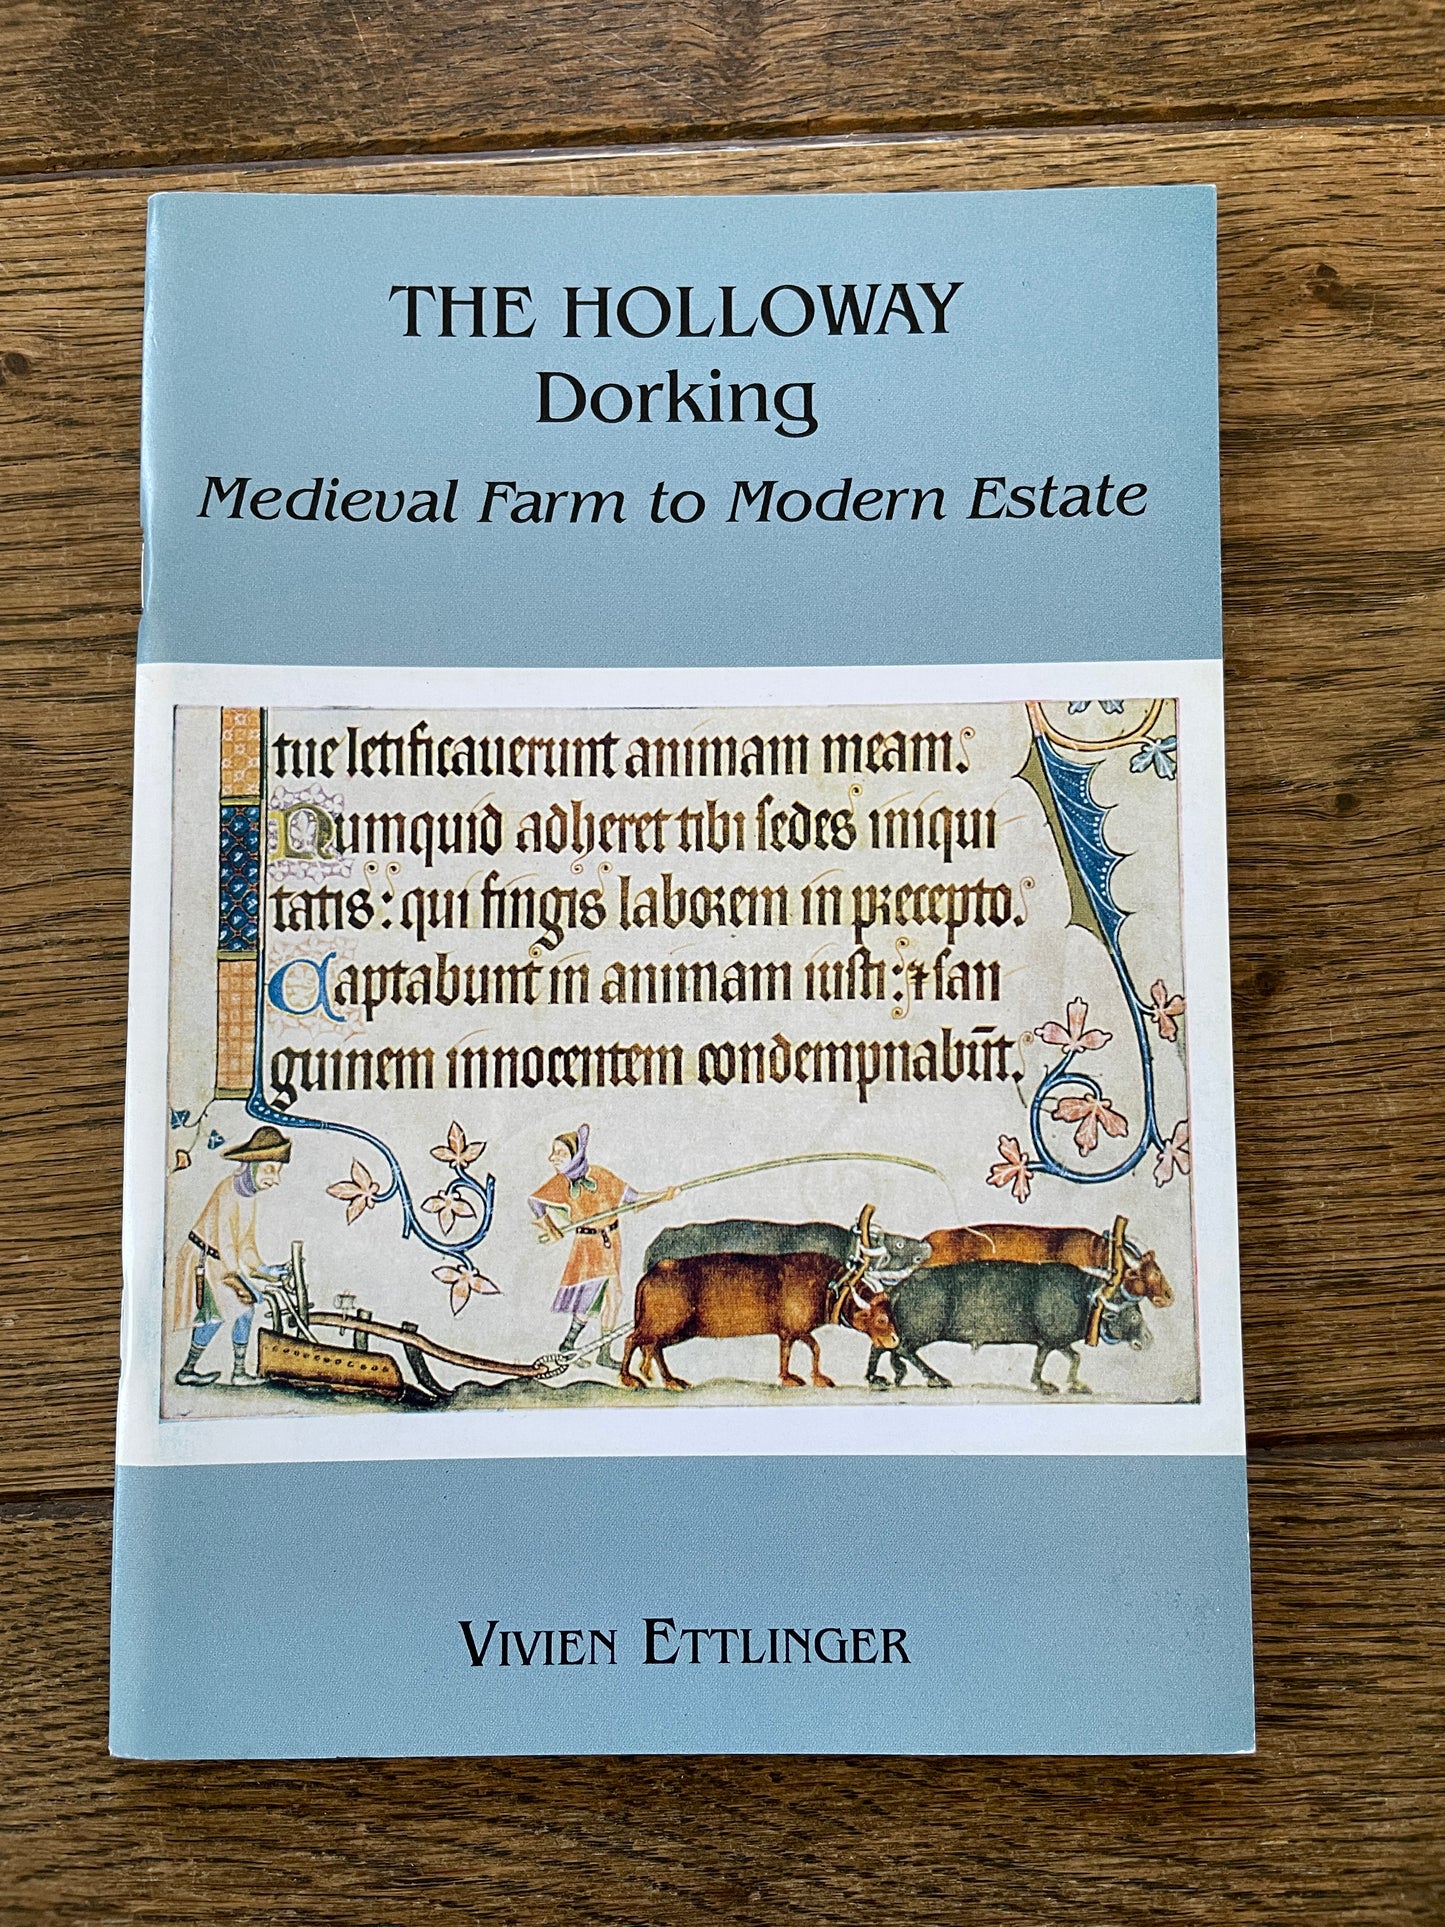 Vintage The Holloway Dorking by Vivien Ettlinger